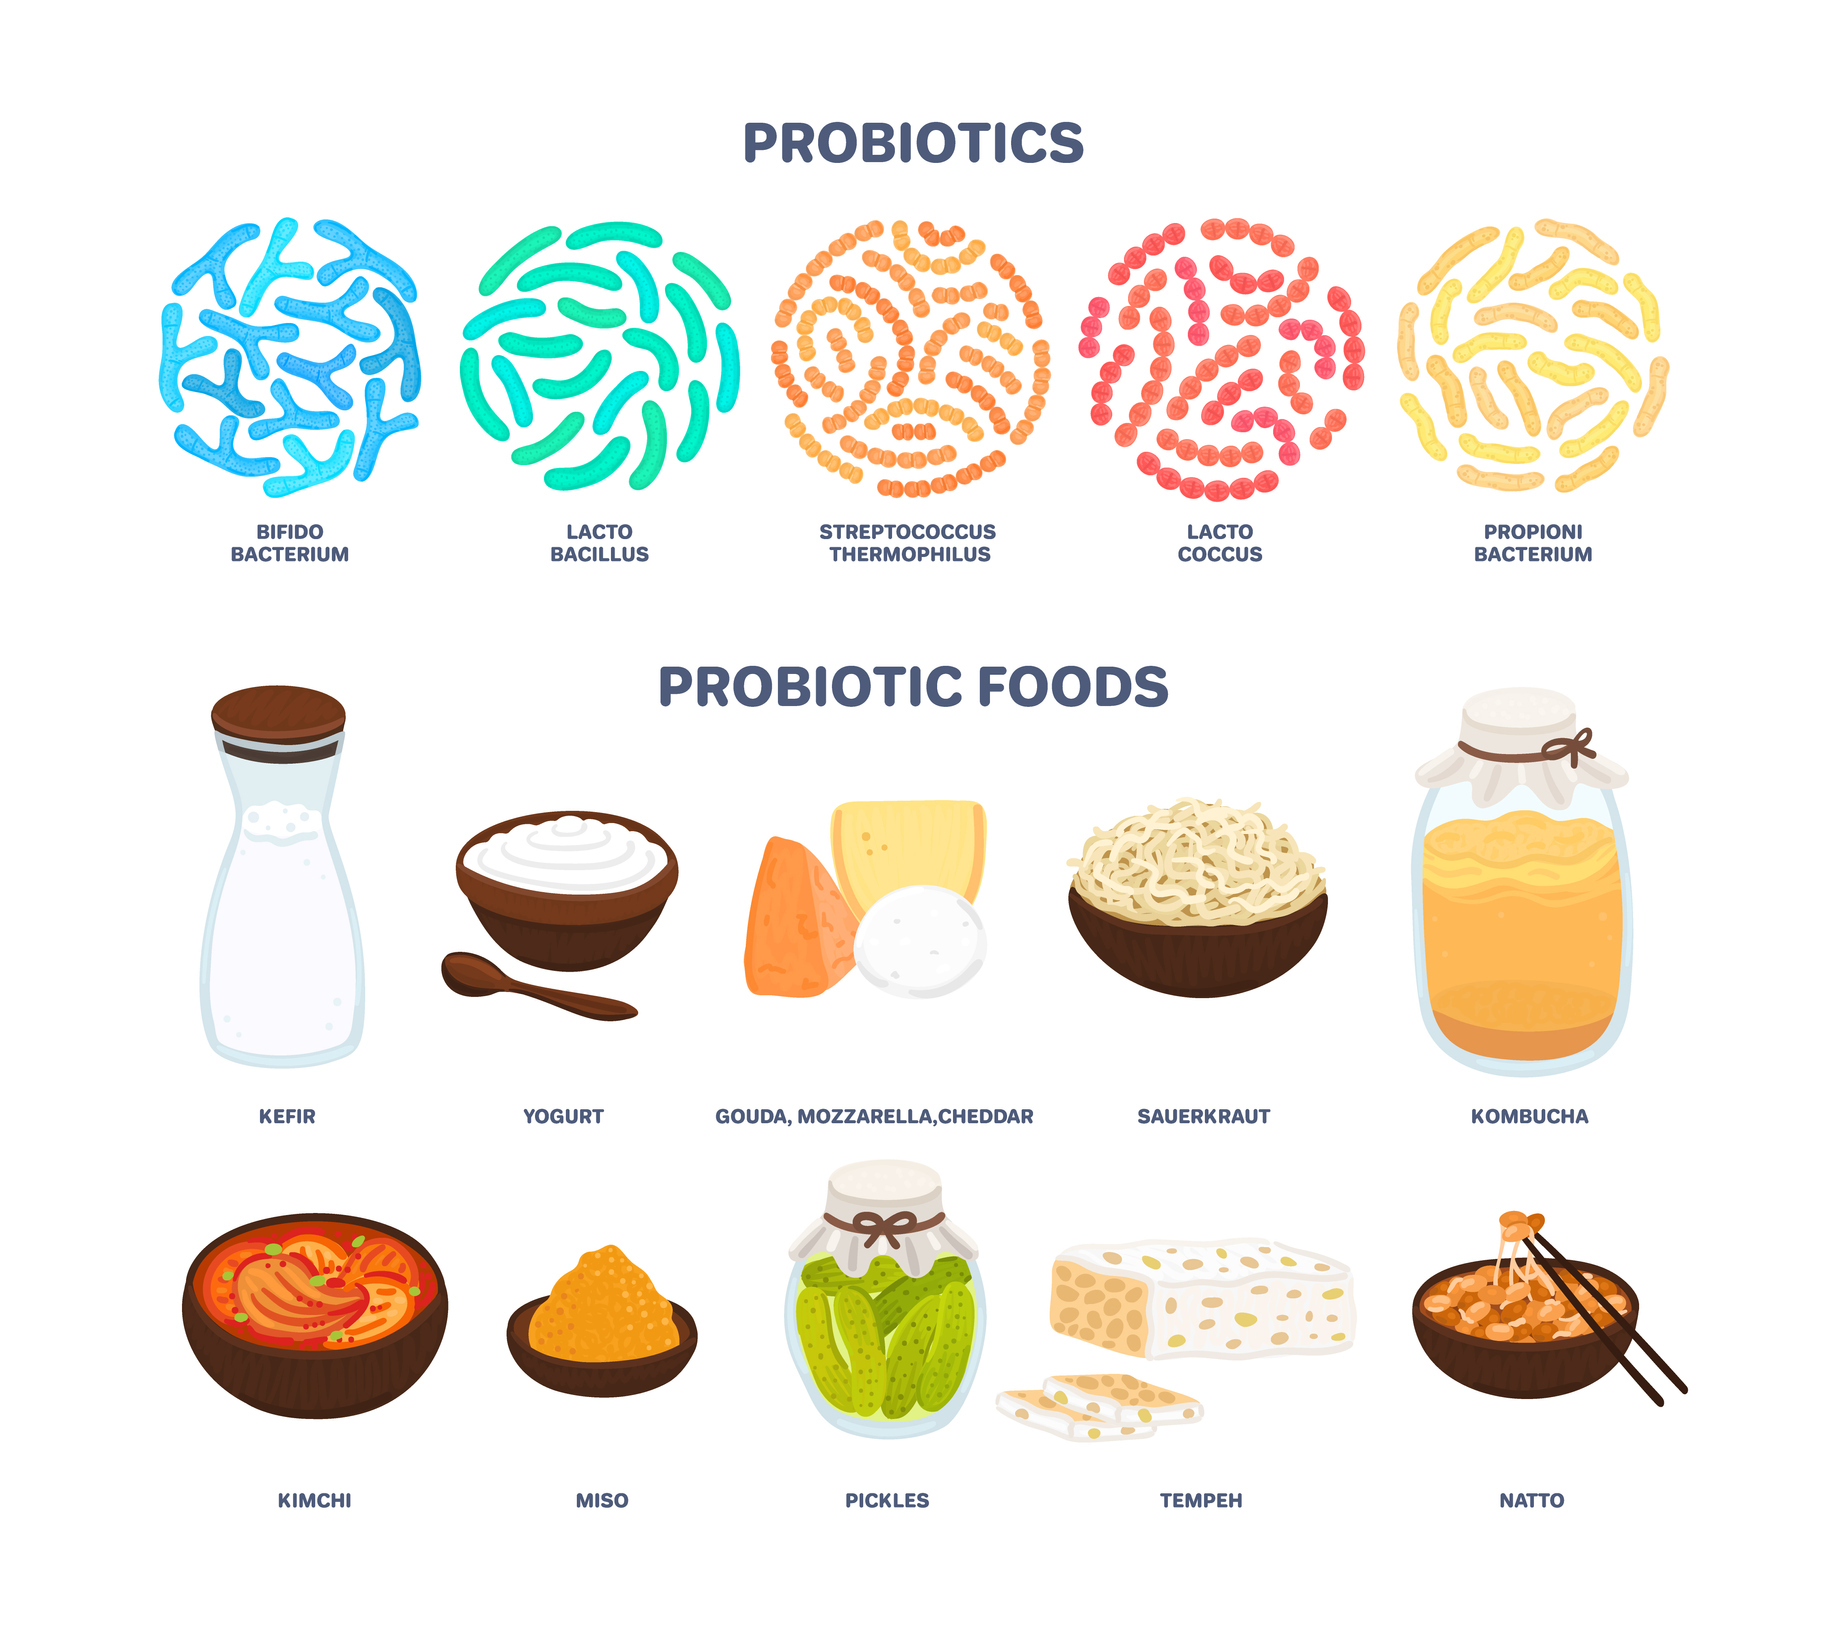 Probiotics and probiotic foods